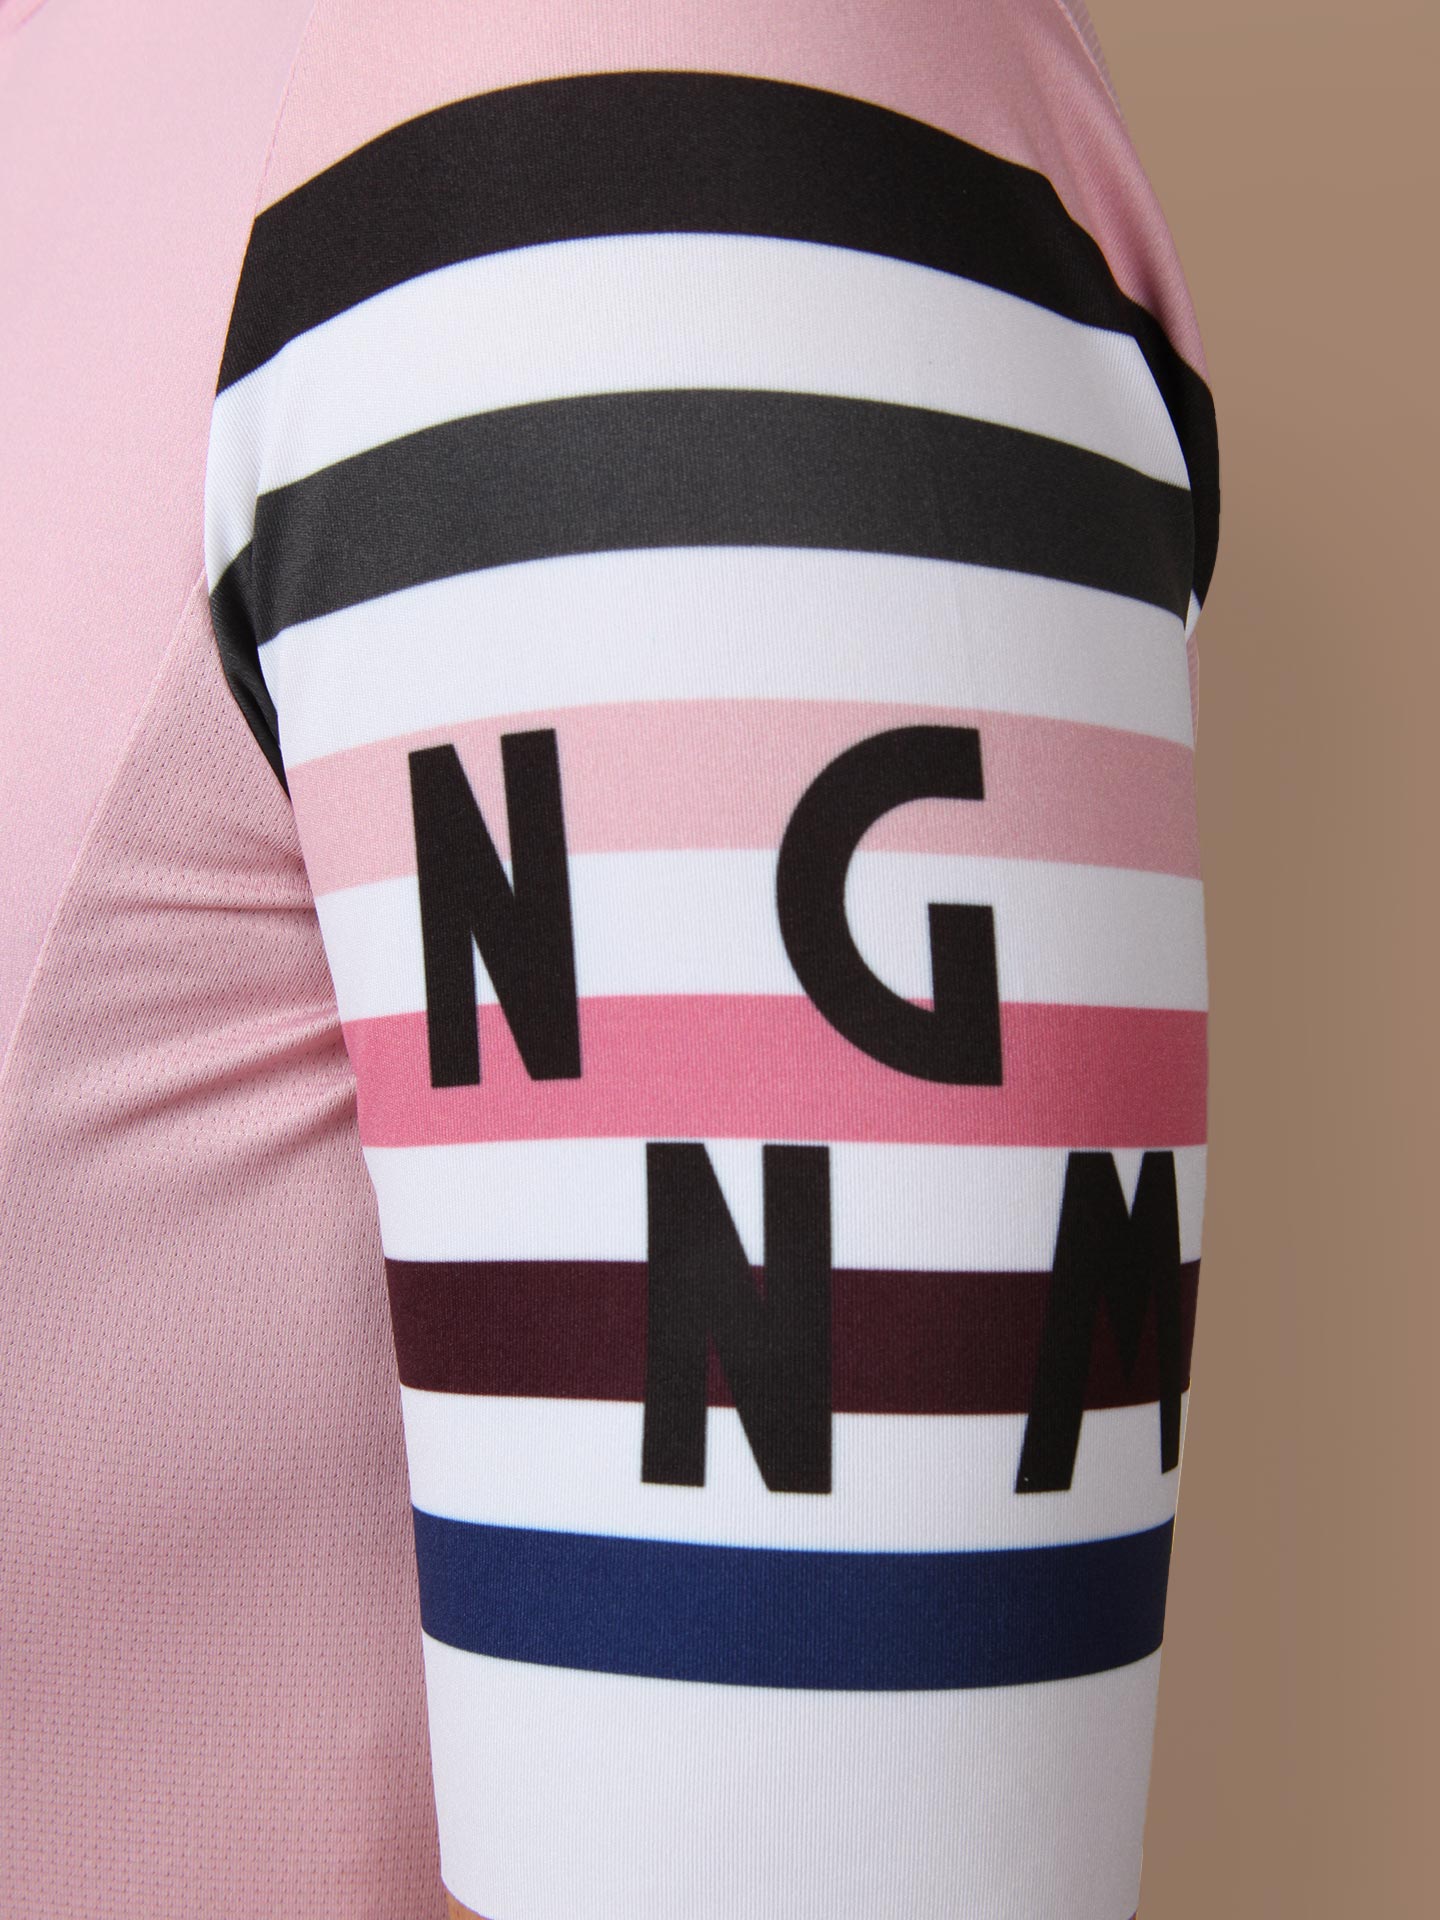 NGNM Stripes cycling jersey rose quartz sleeve NGNM Logo multi-colour